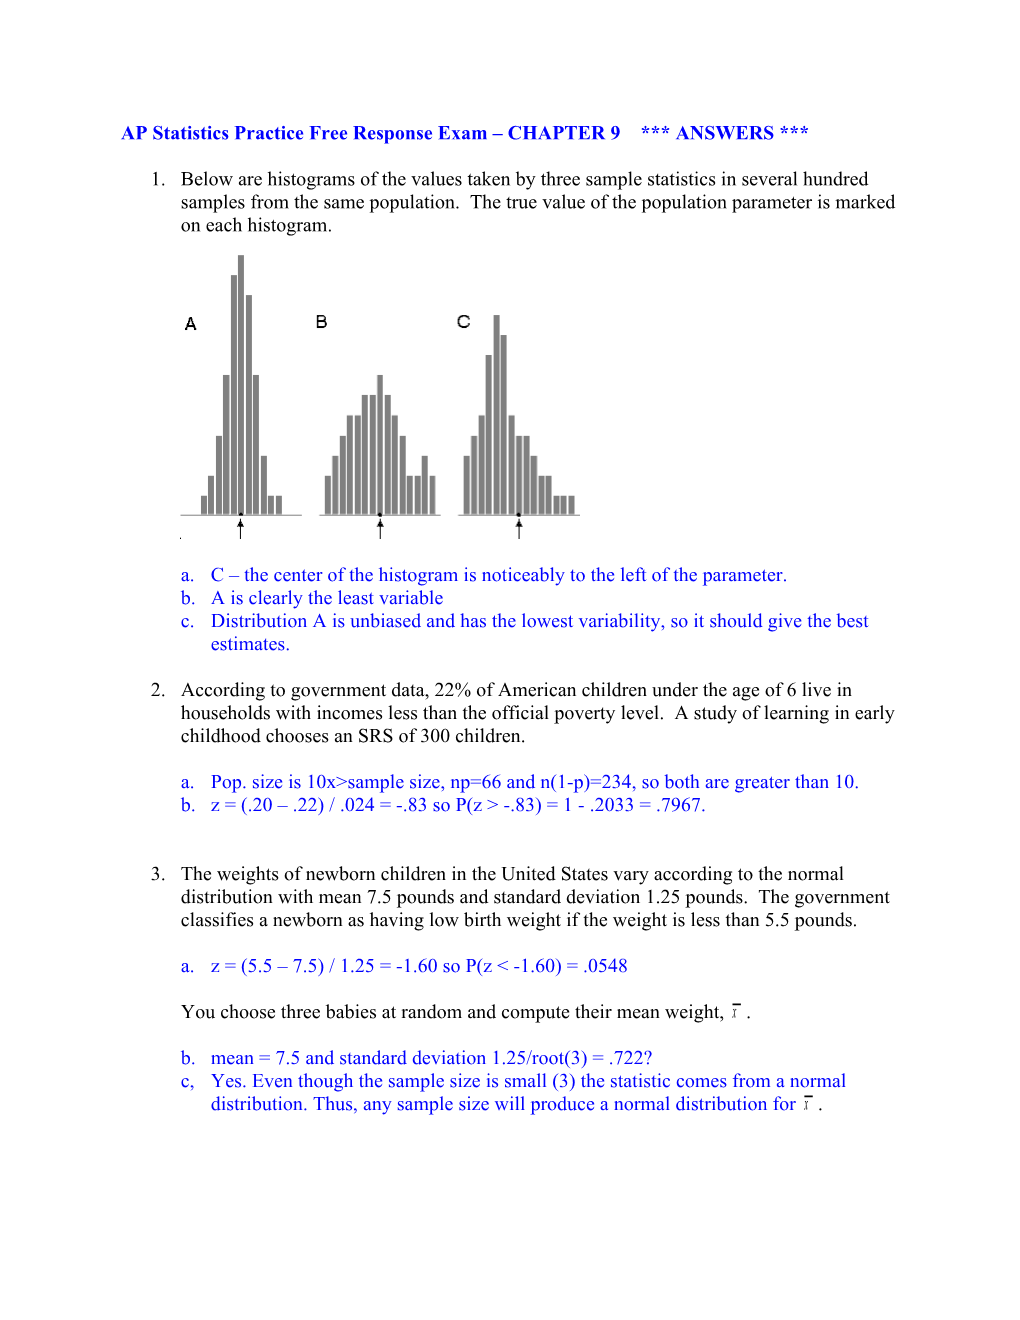 AP Statistics Practice Free Response Exam CHAPTER 9